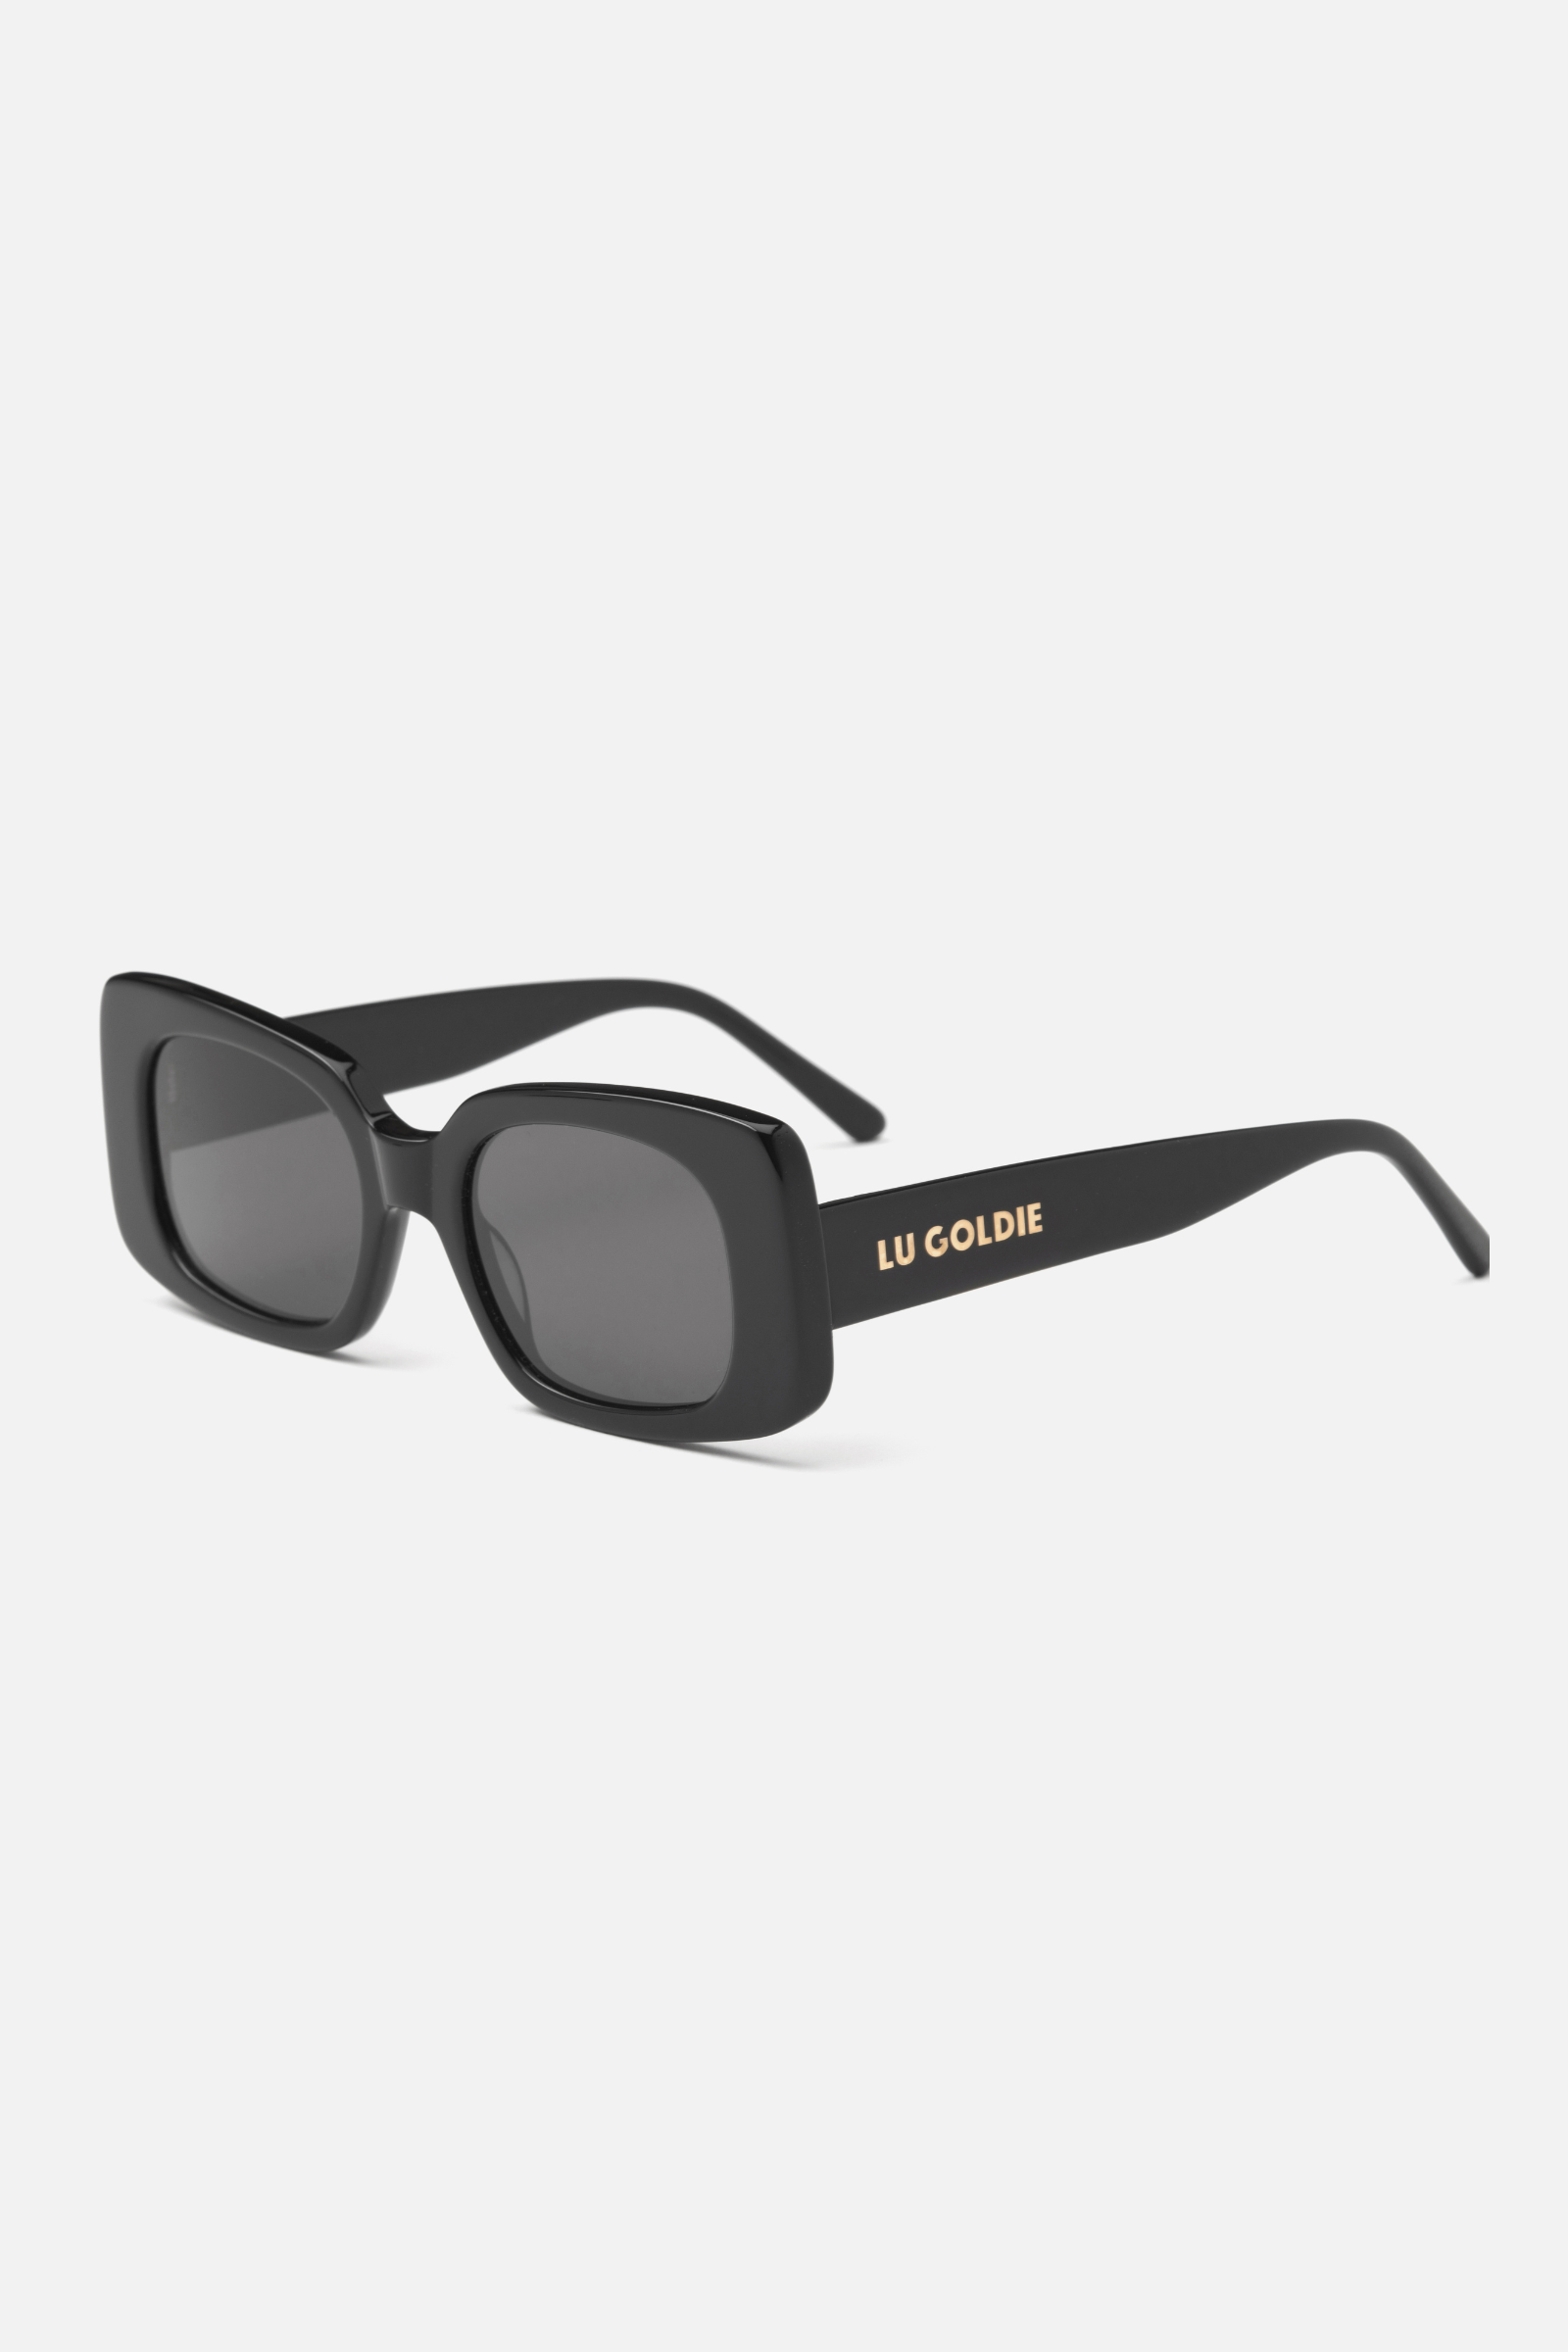 Lu Goldie Coco Sunglasses Black 